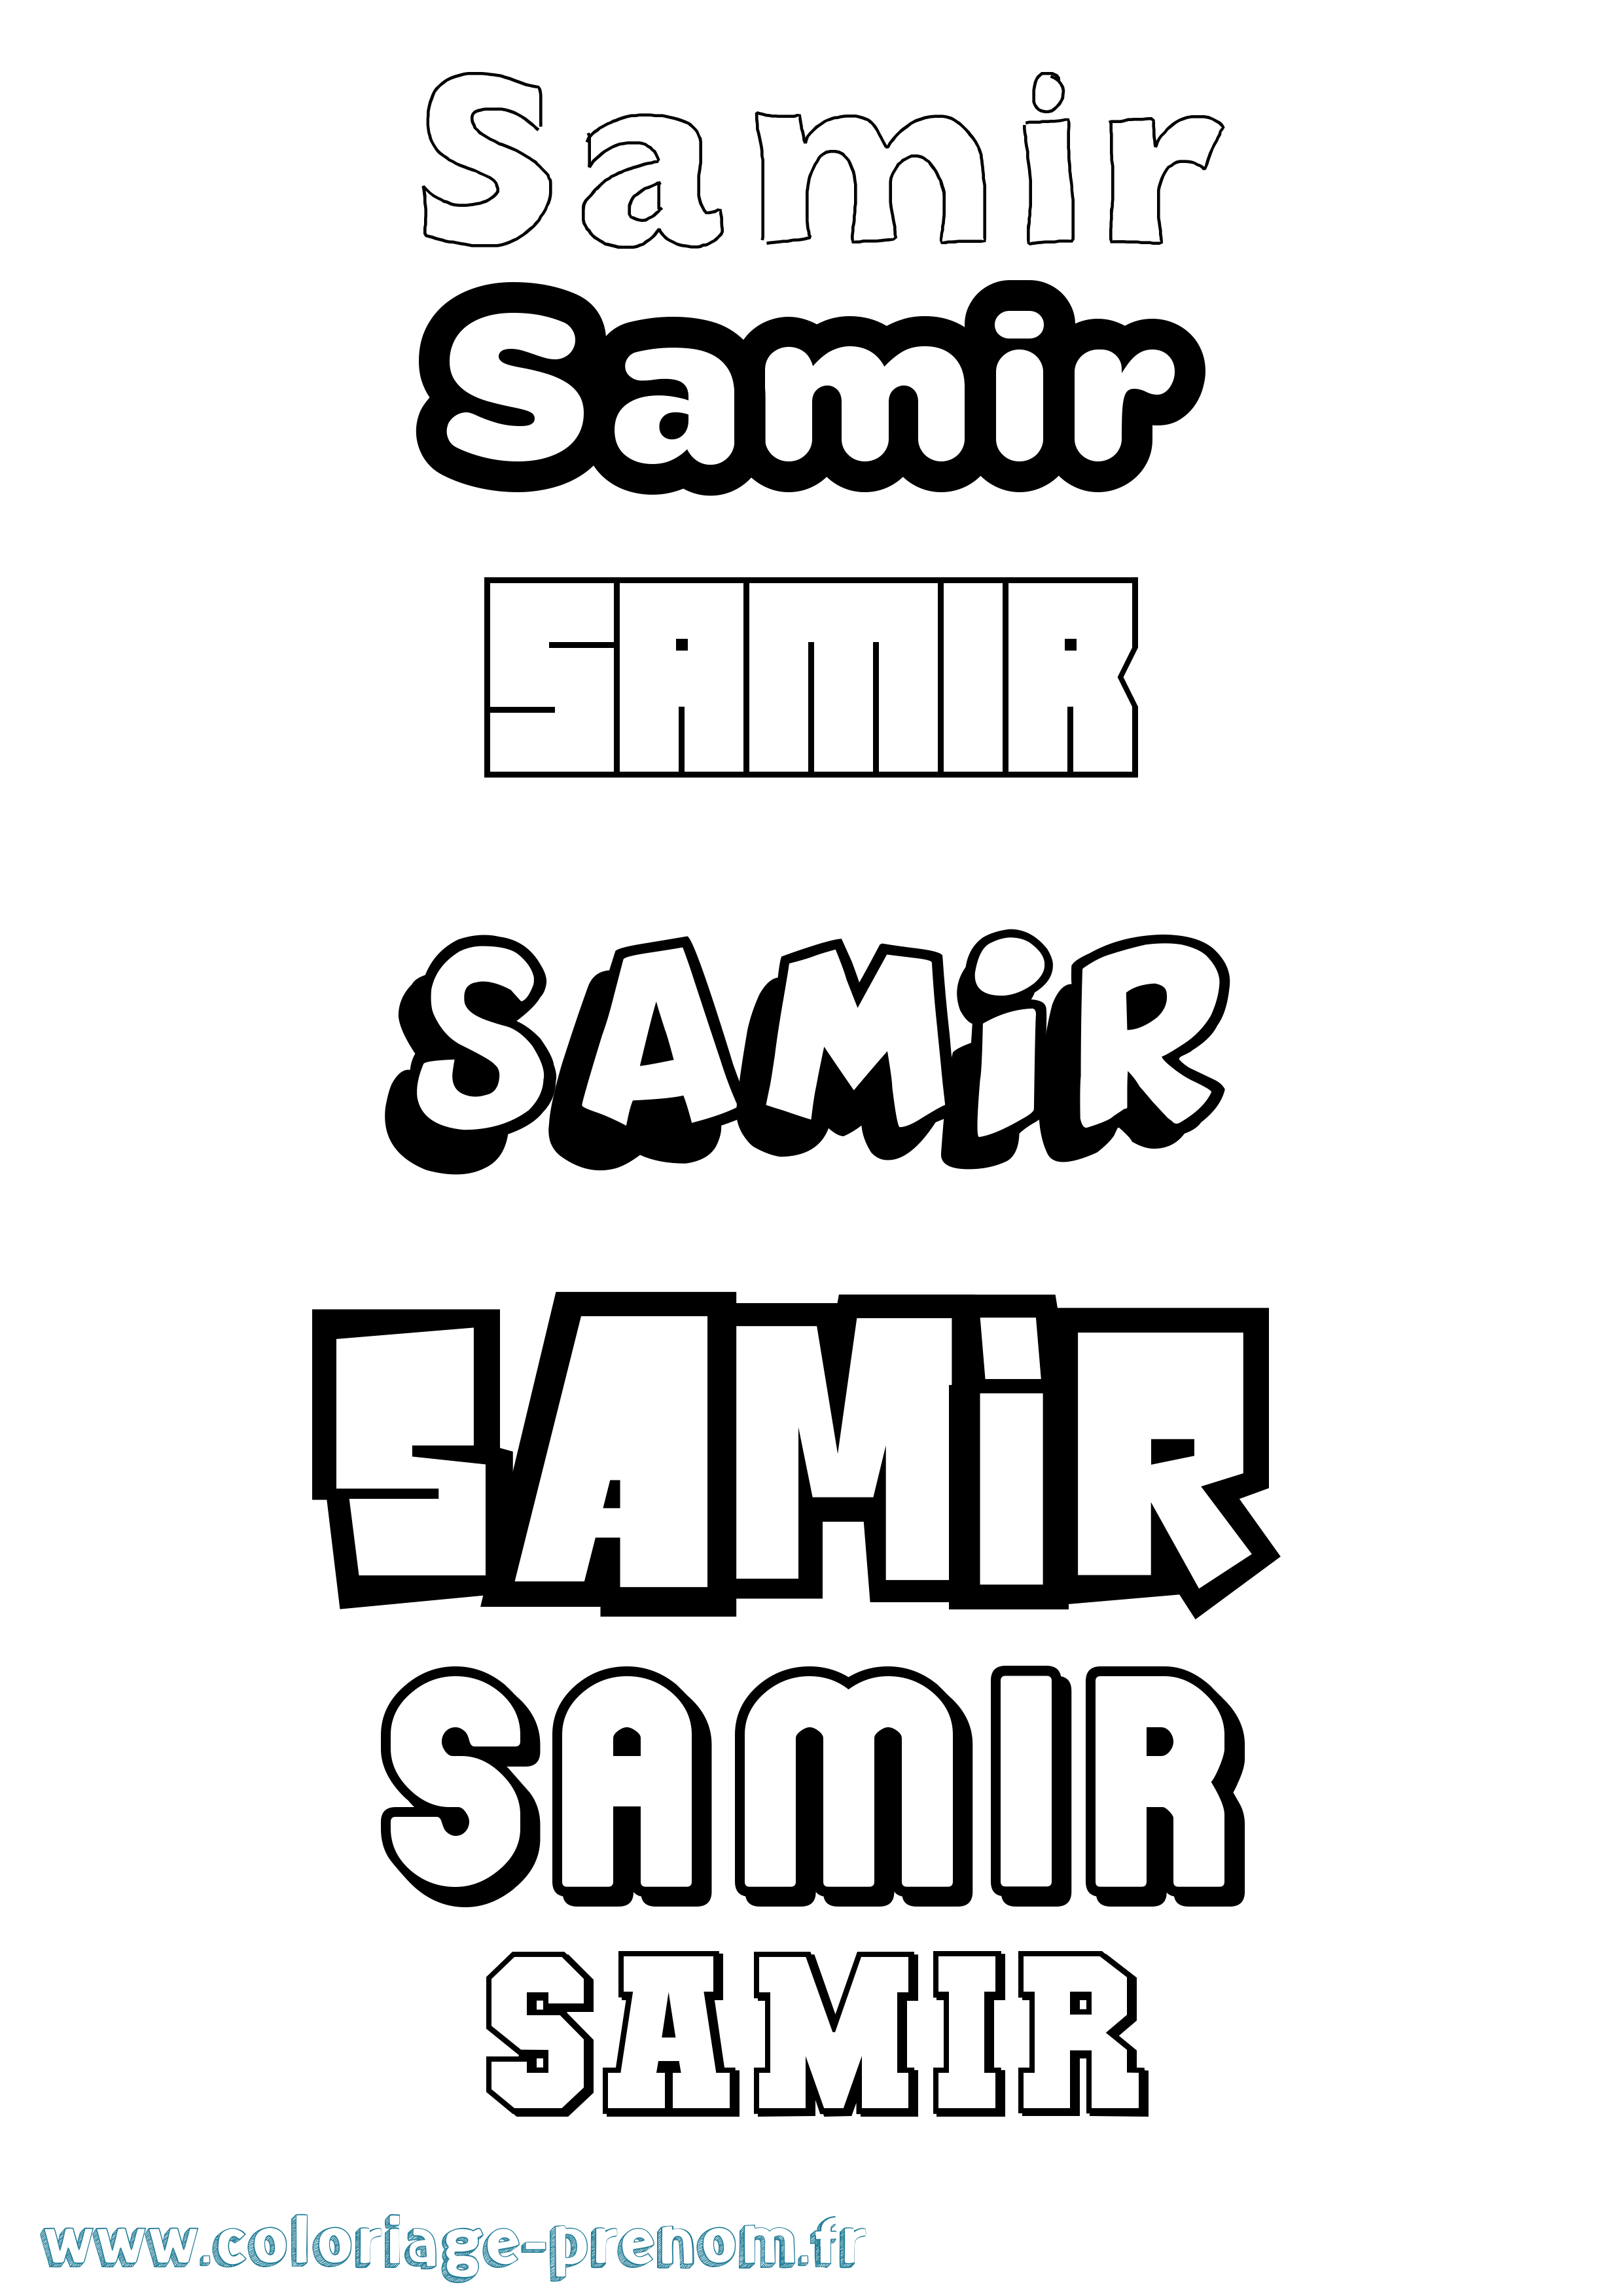 Coloriage prénom Samir Simple